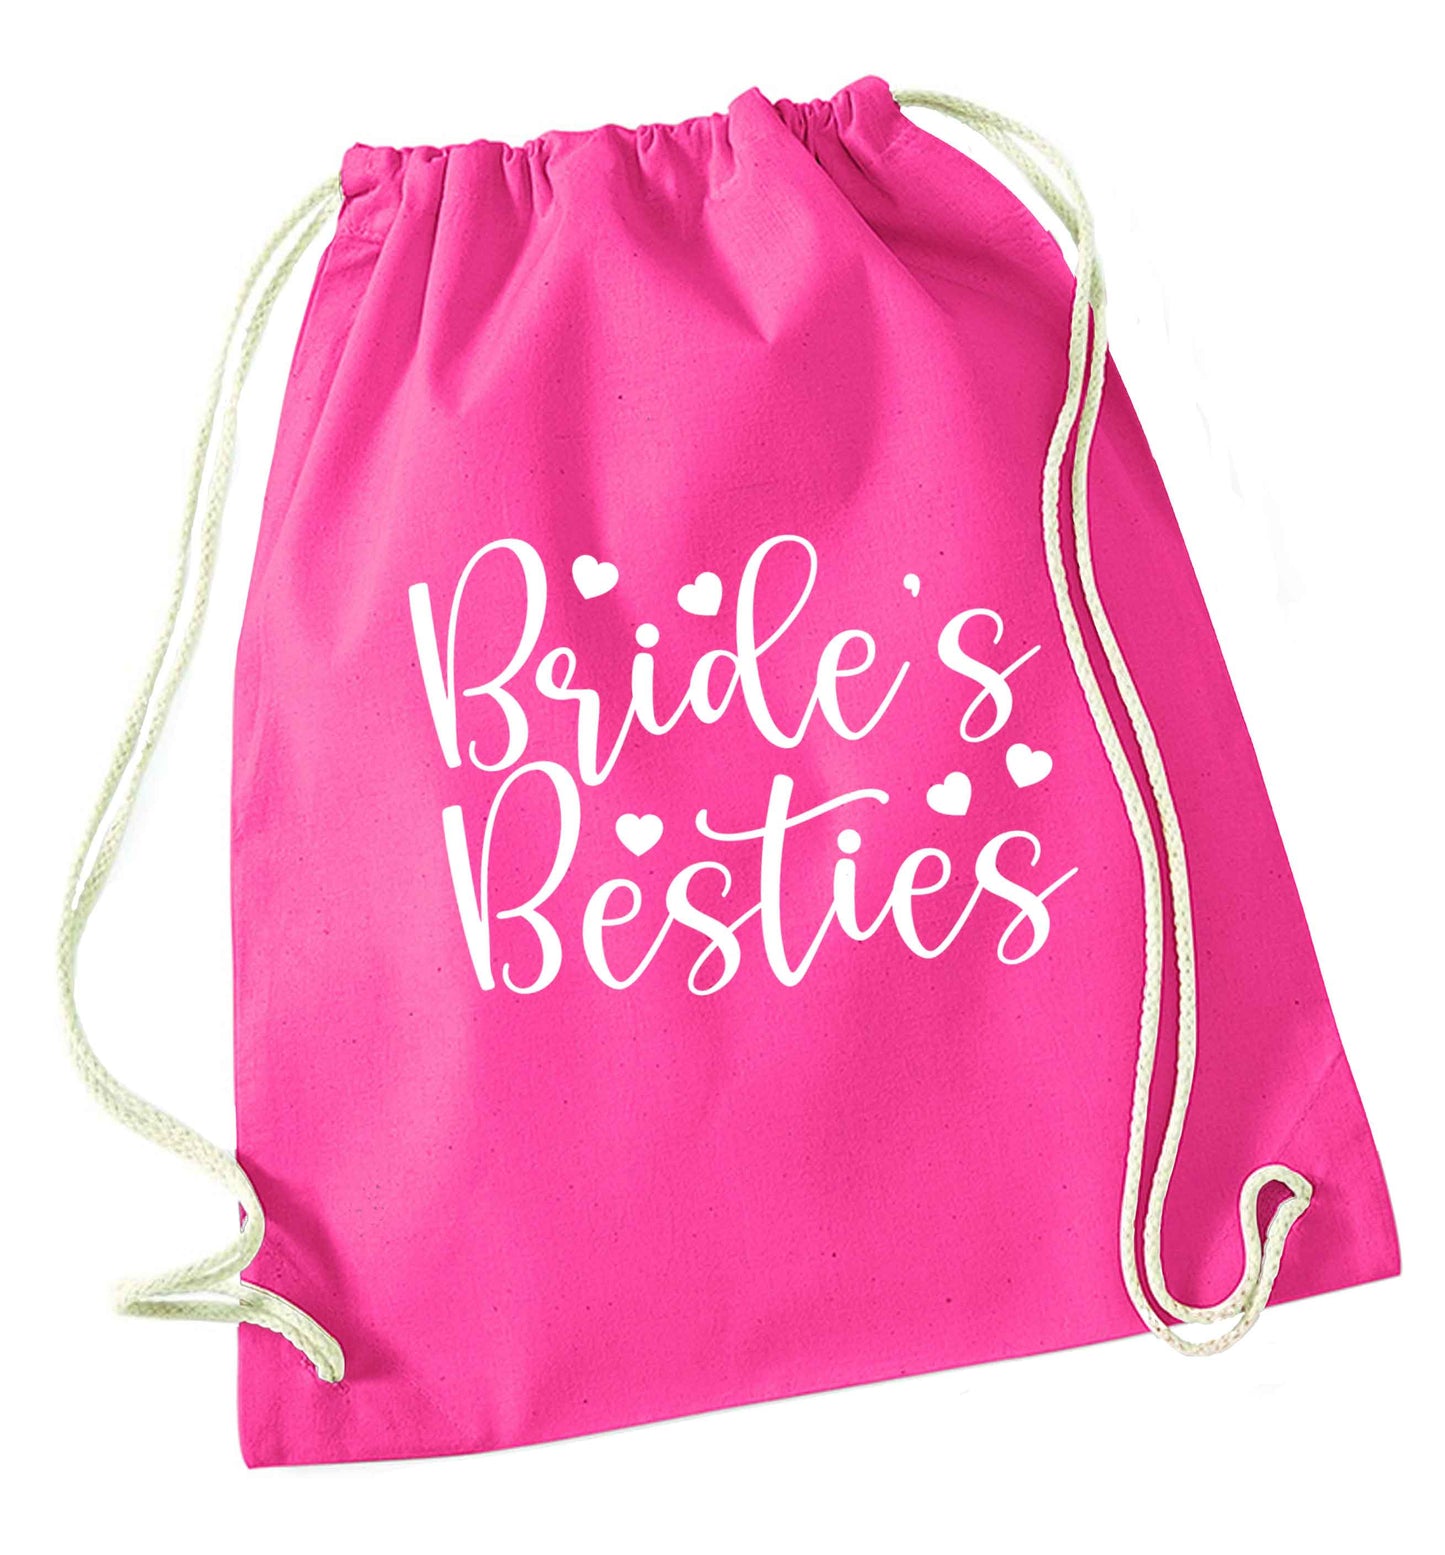 Brides besties pink drawstring bag